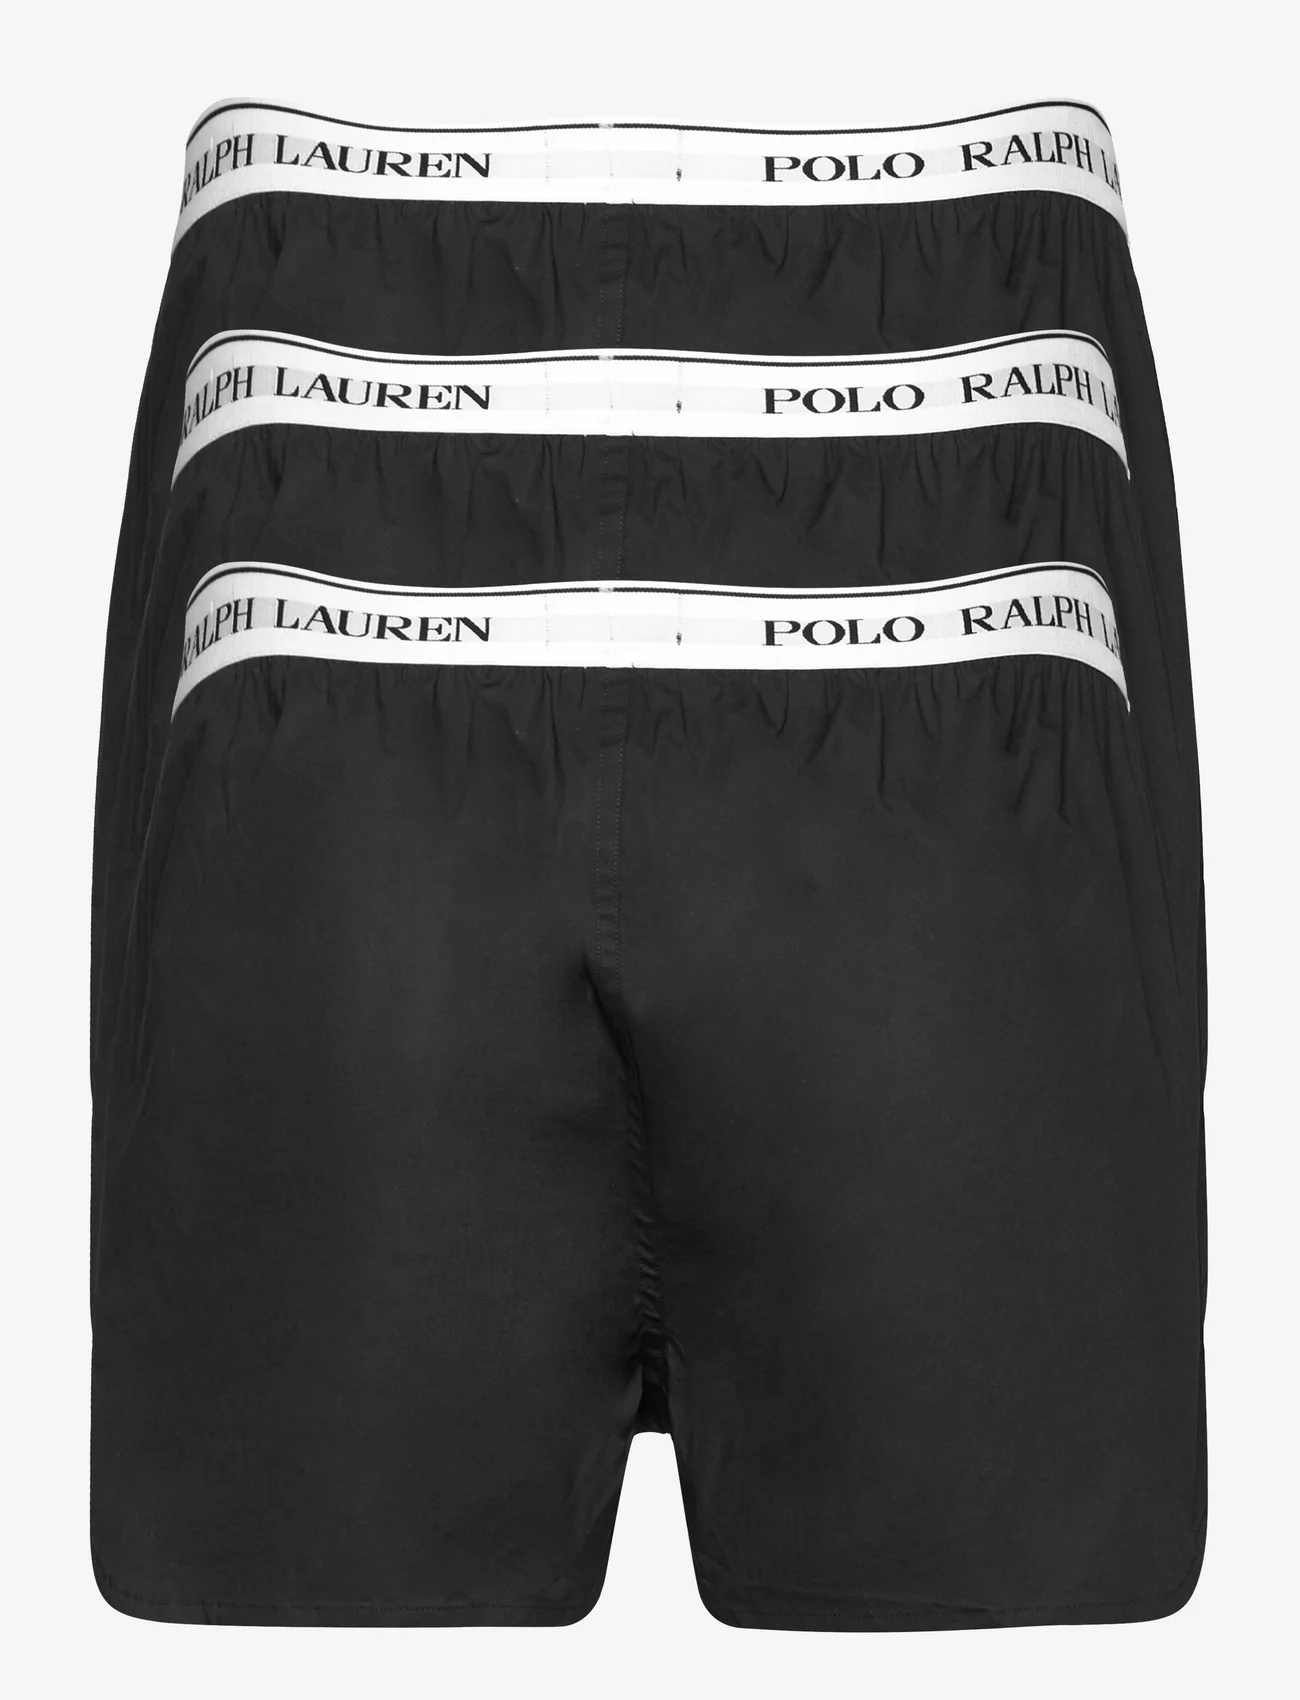 Polo Ralph Lauren Underwear - Stretch Cotton Boxer 3-Pack - multipack underbukser - 3pk black/black/b - 1